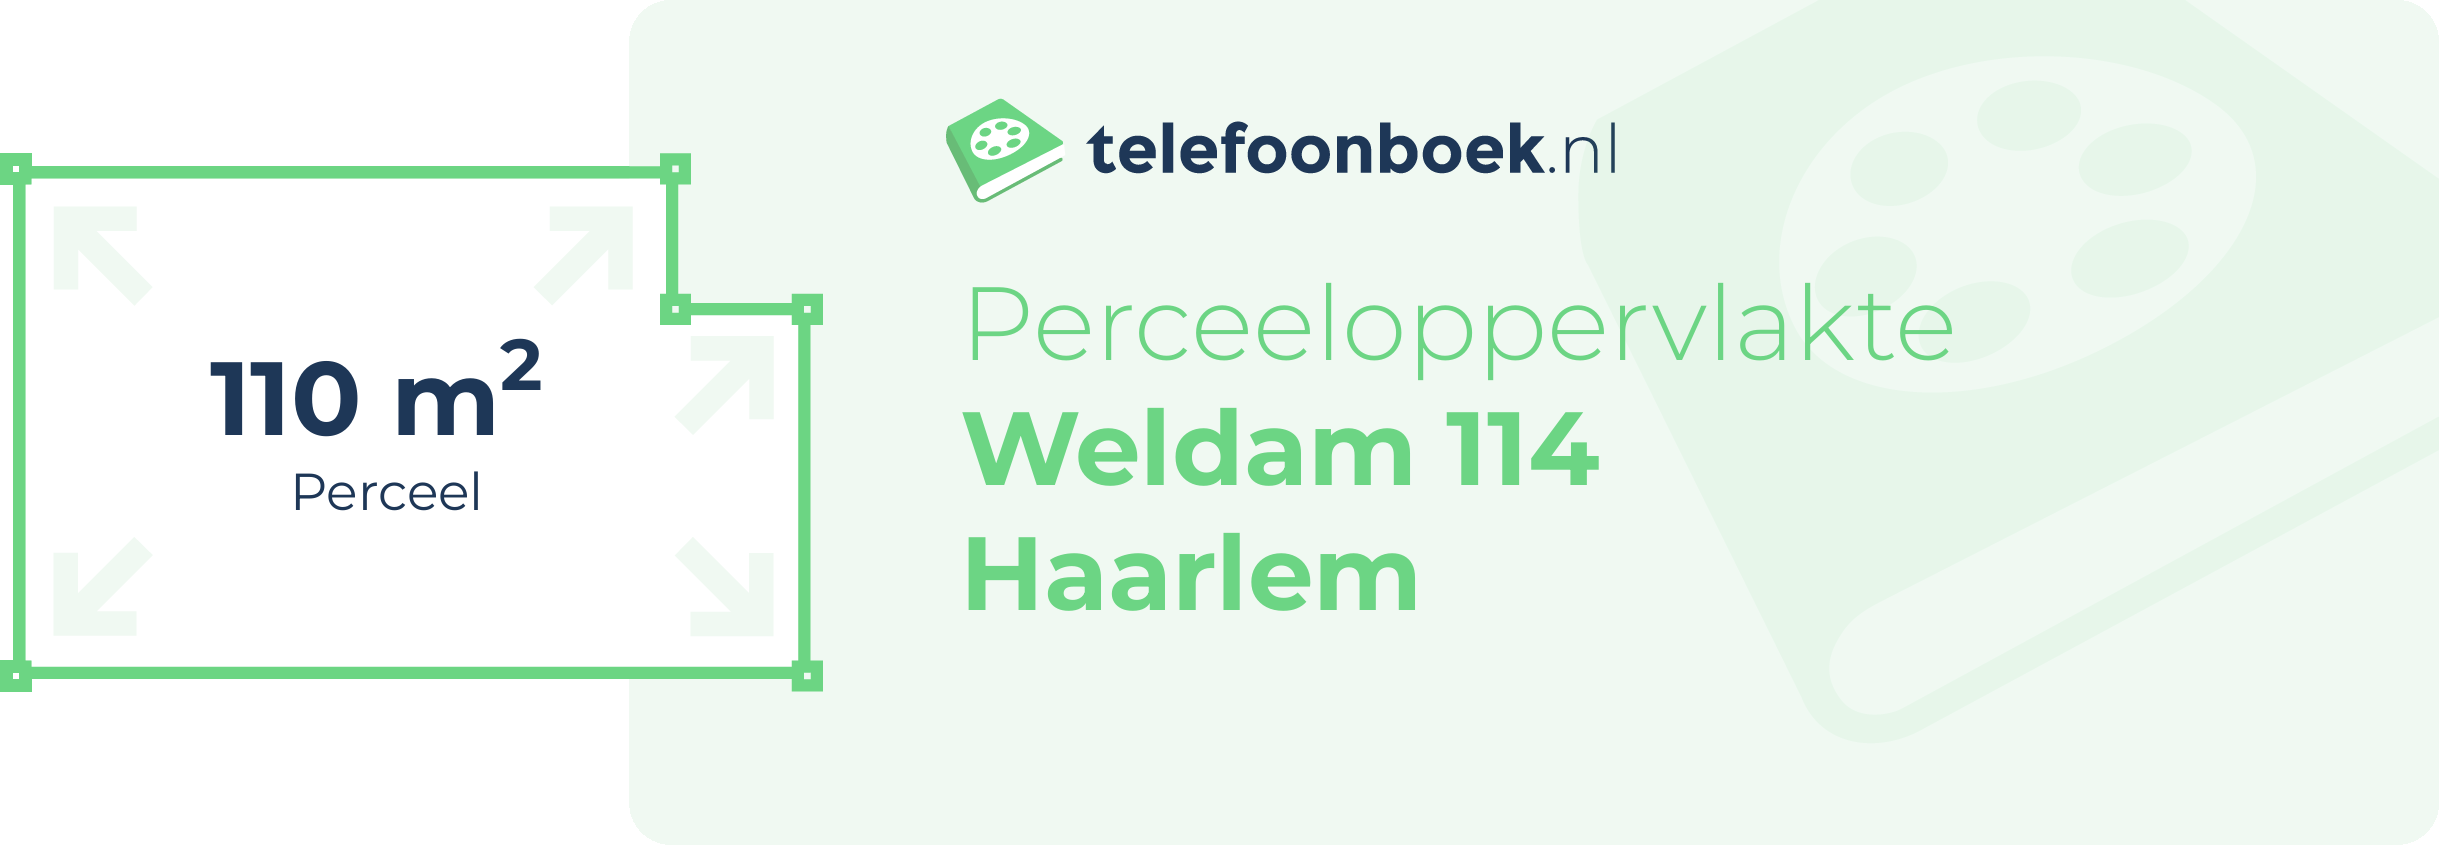 Perceeloppervlakte Weldam 114 Haarlem